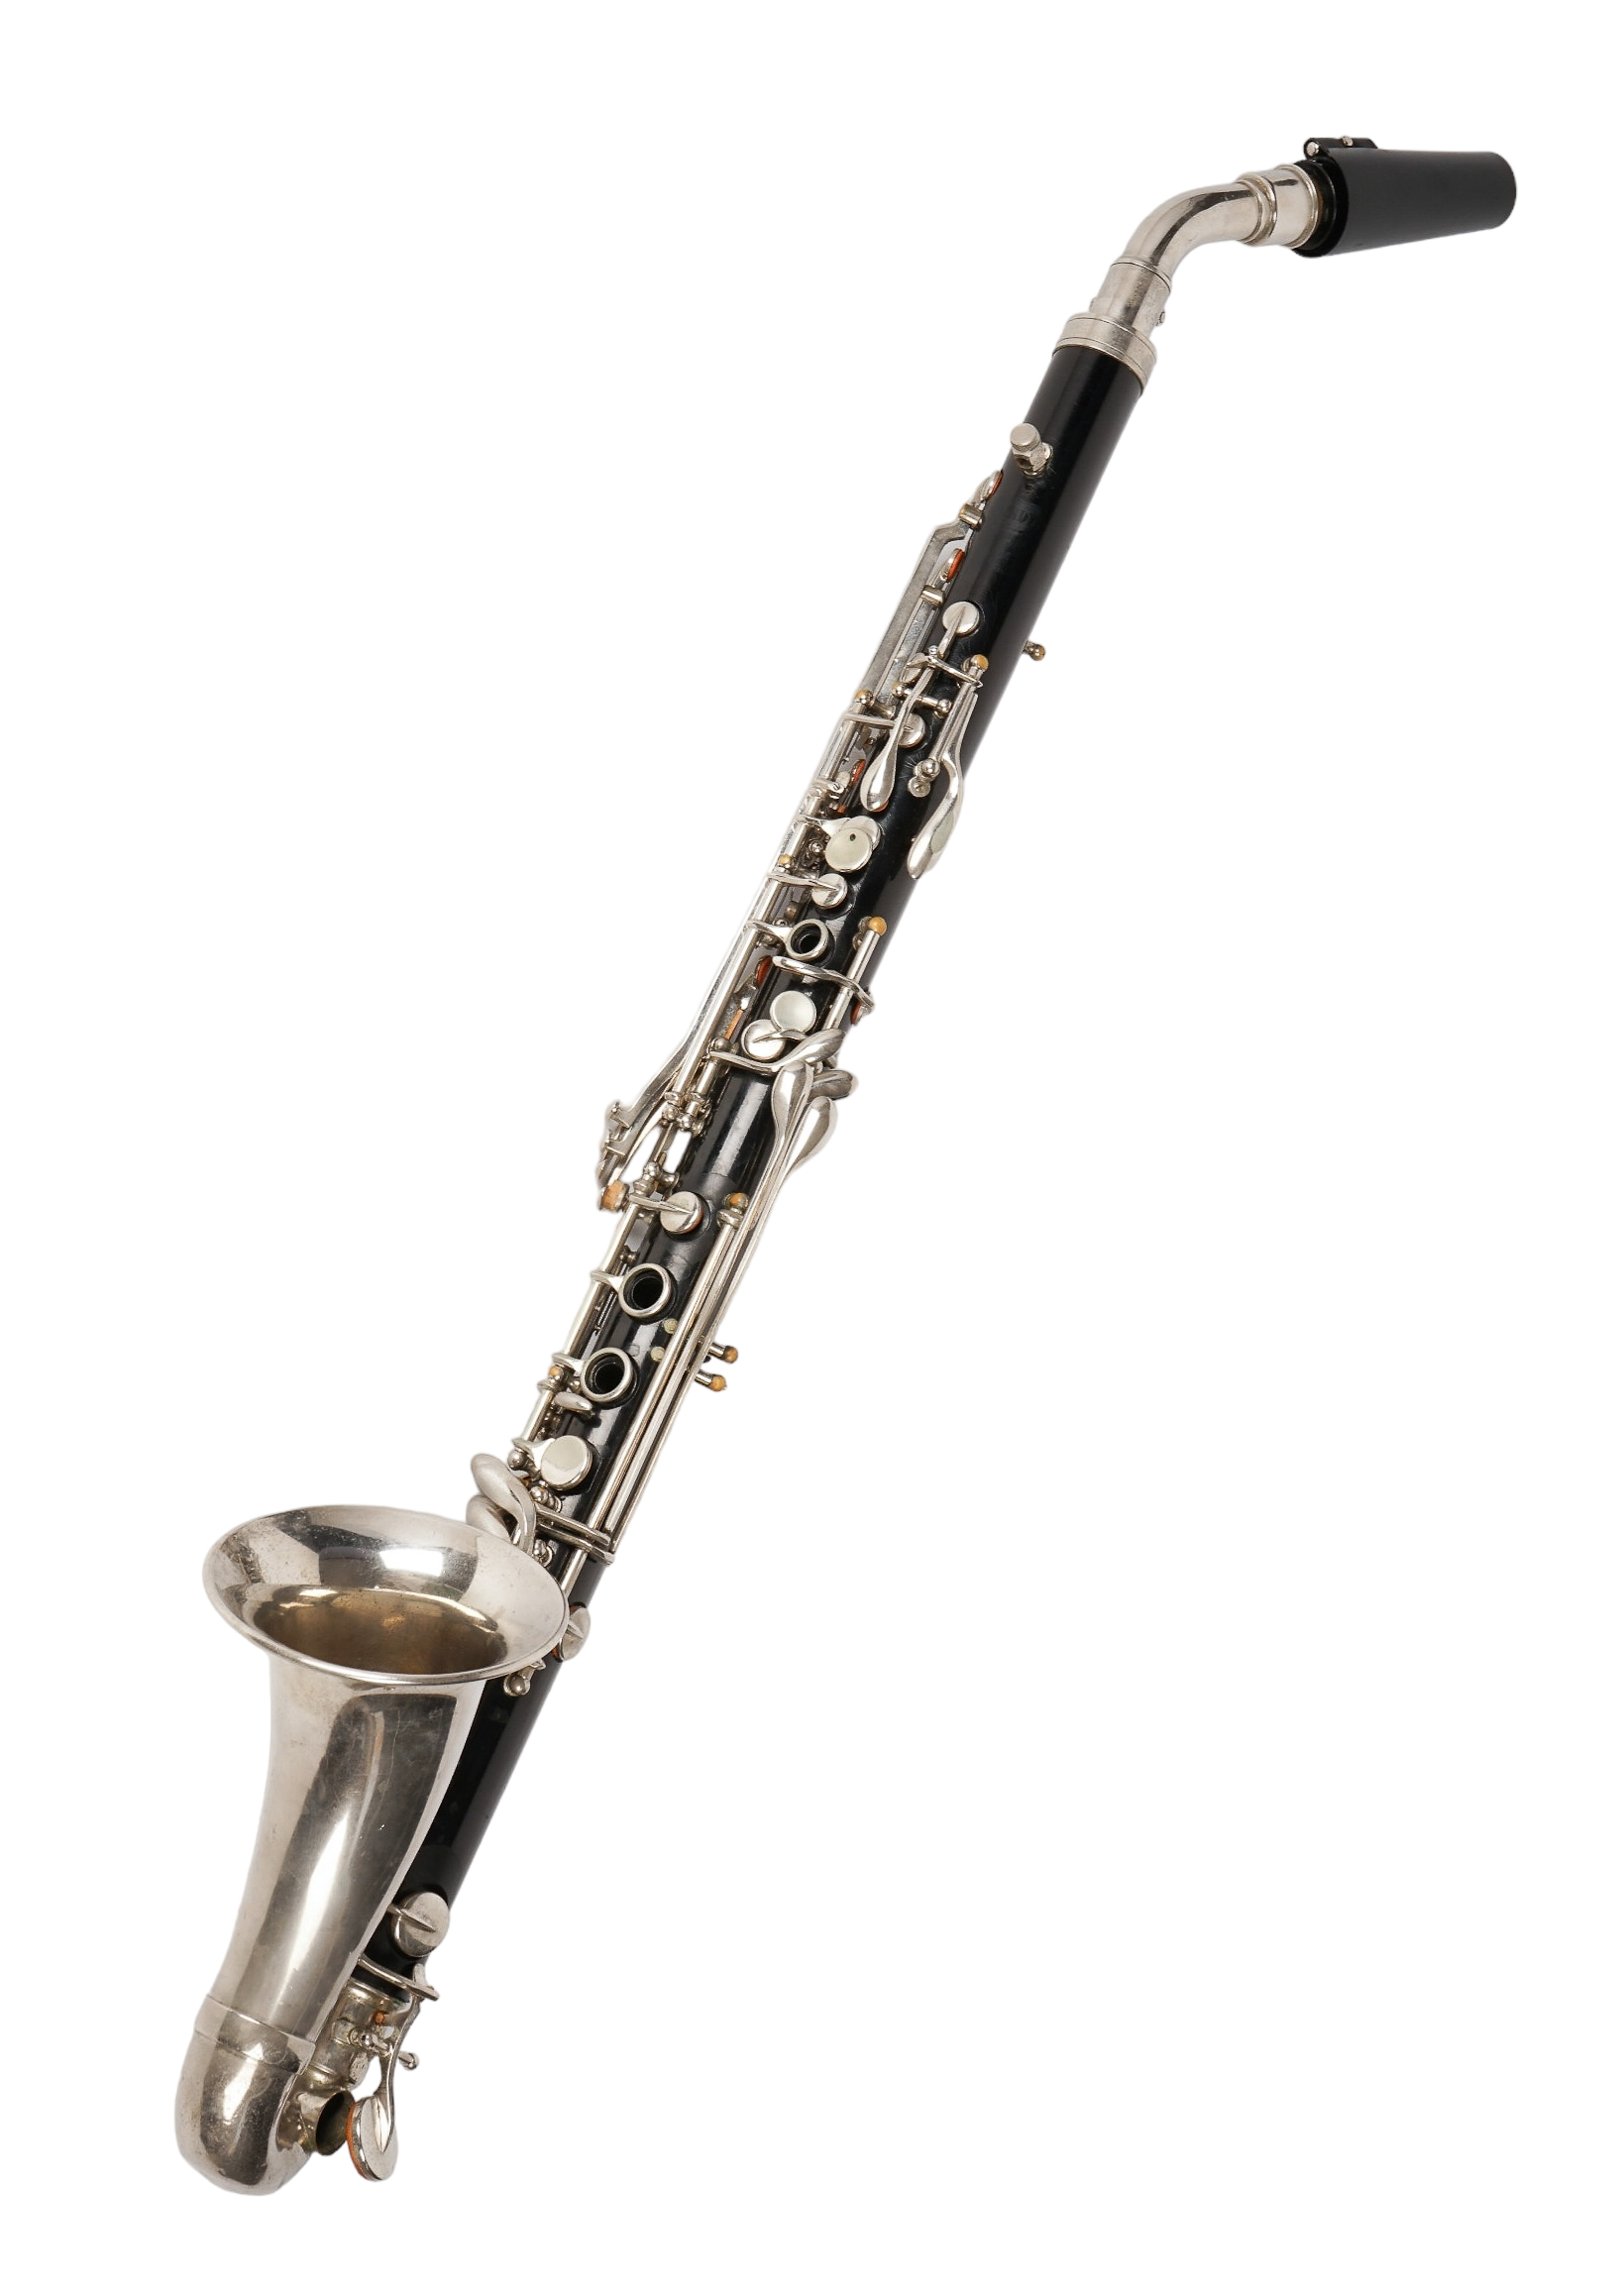 Selmer alto clarinet serial 1848  2e2287